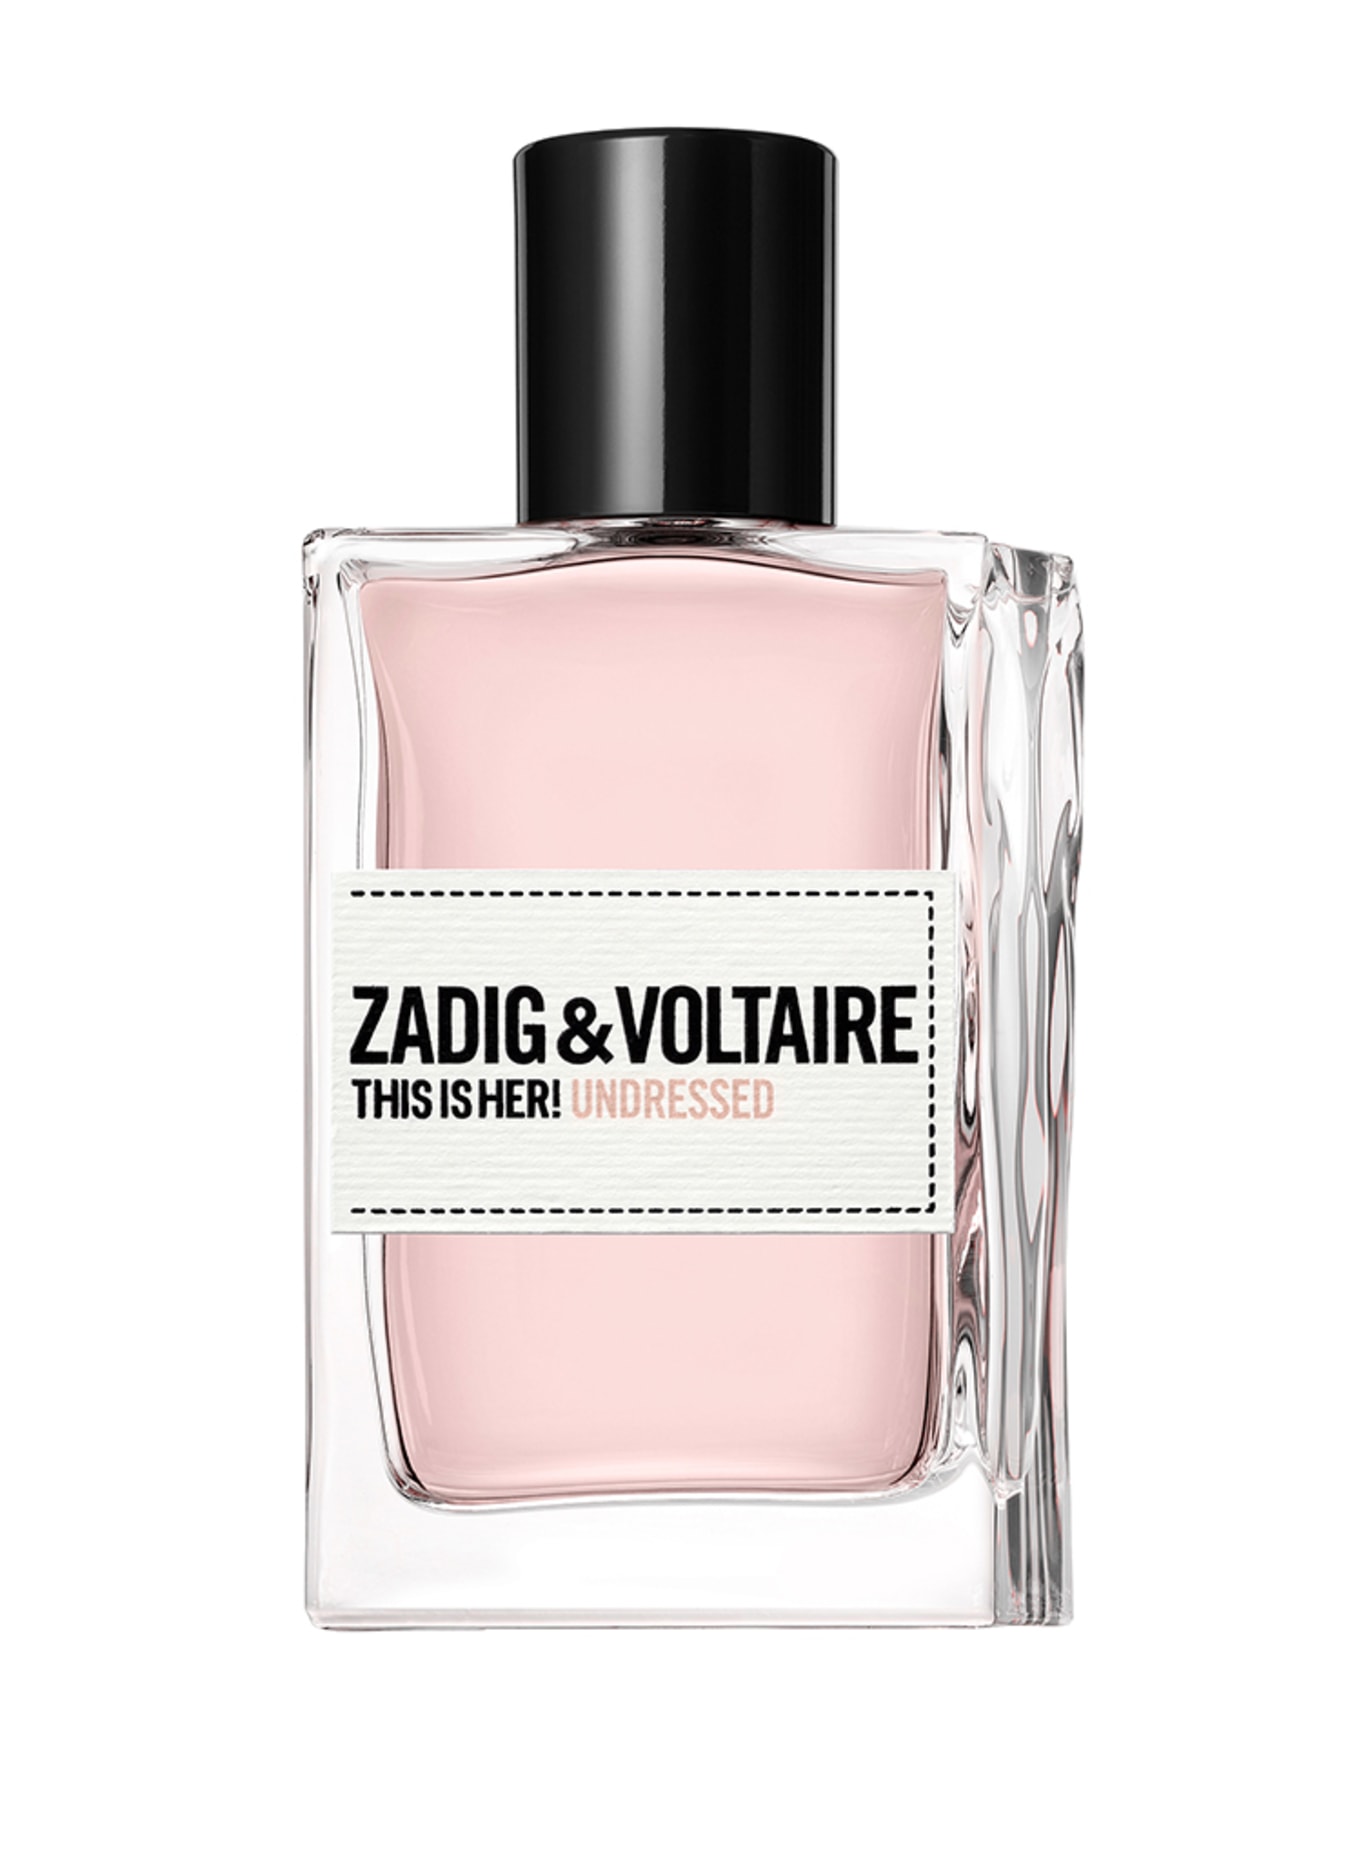 ZADIG & VOLTAIRE Fragrances THIS IS HER! UNDRESSED (Obrazek 1)